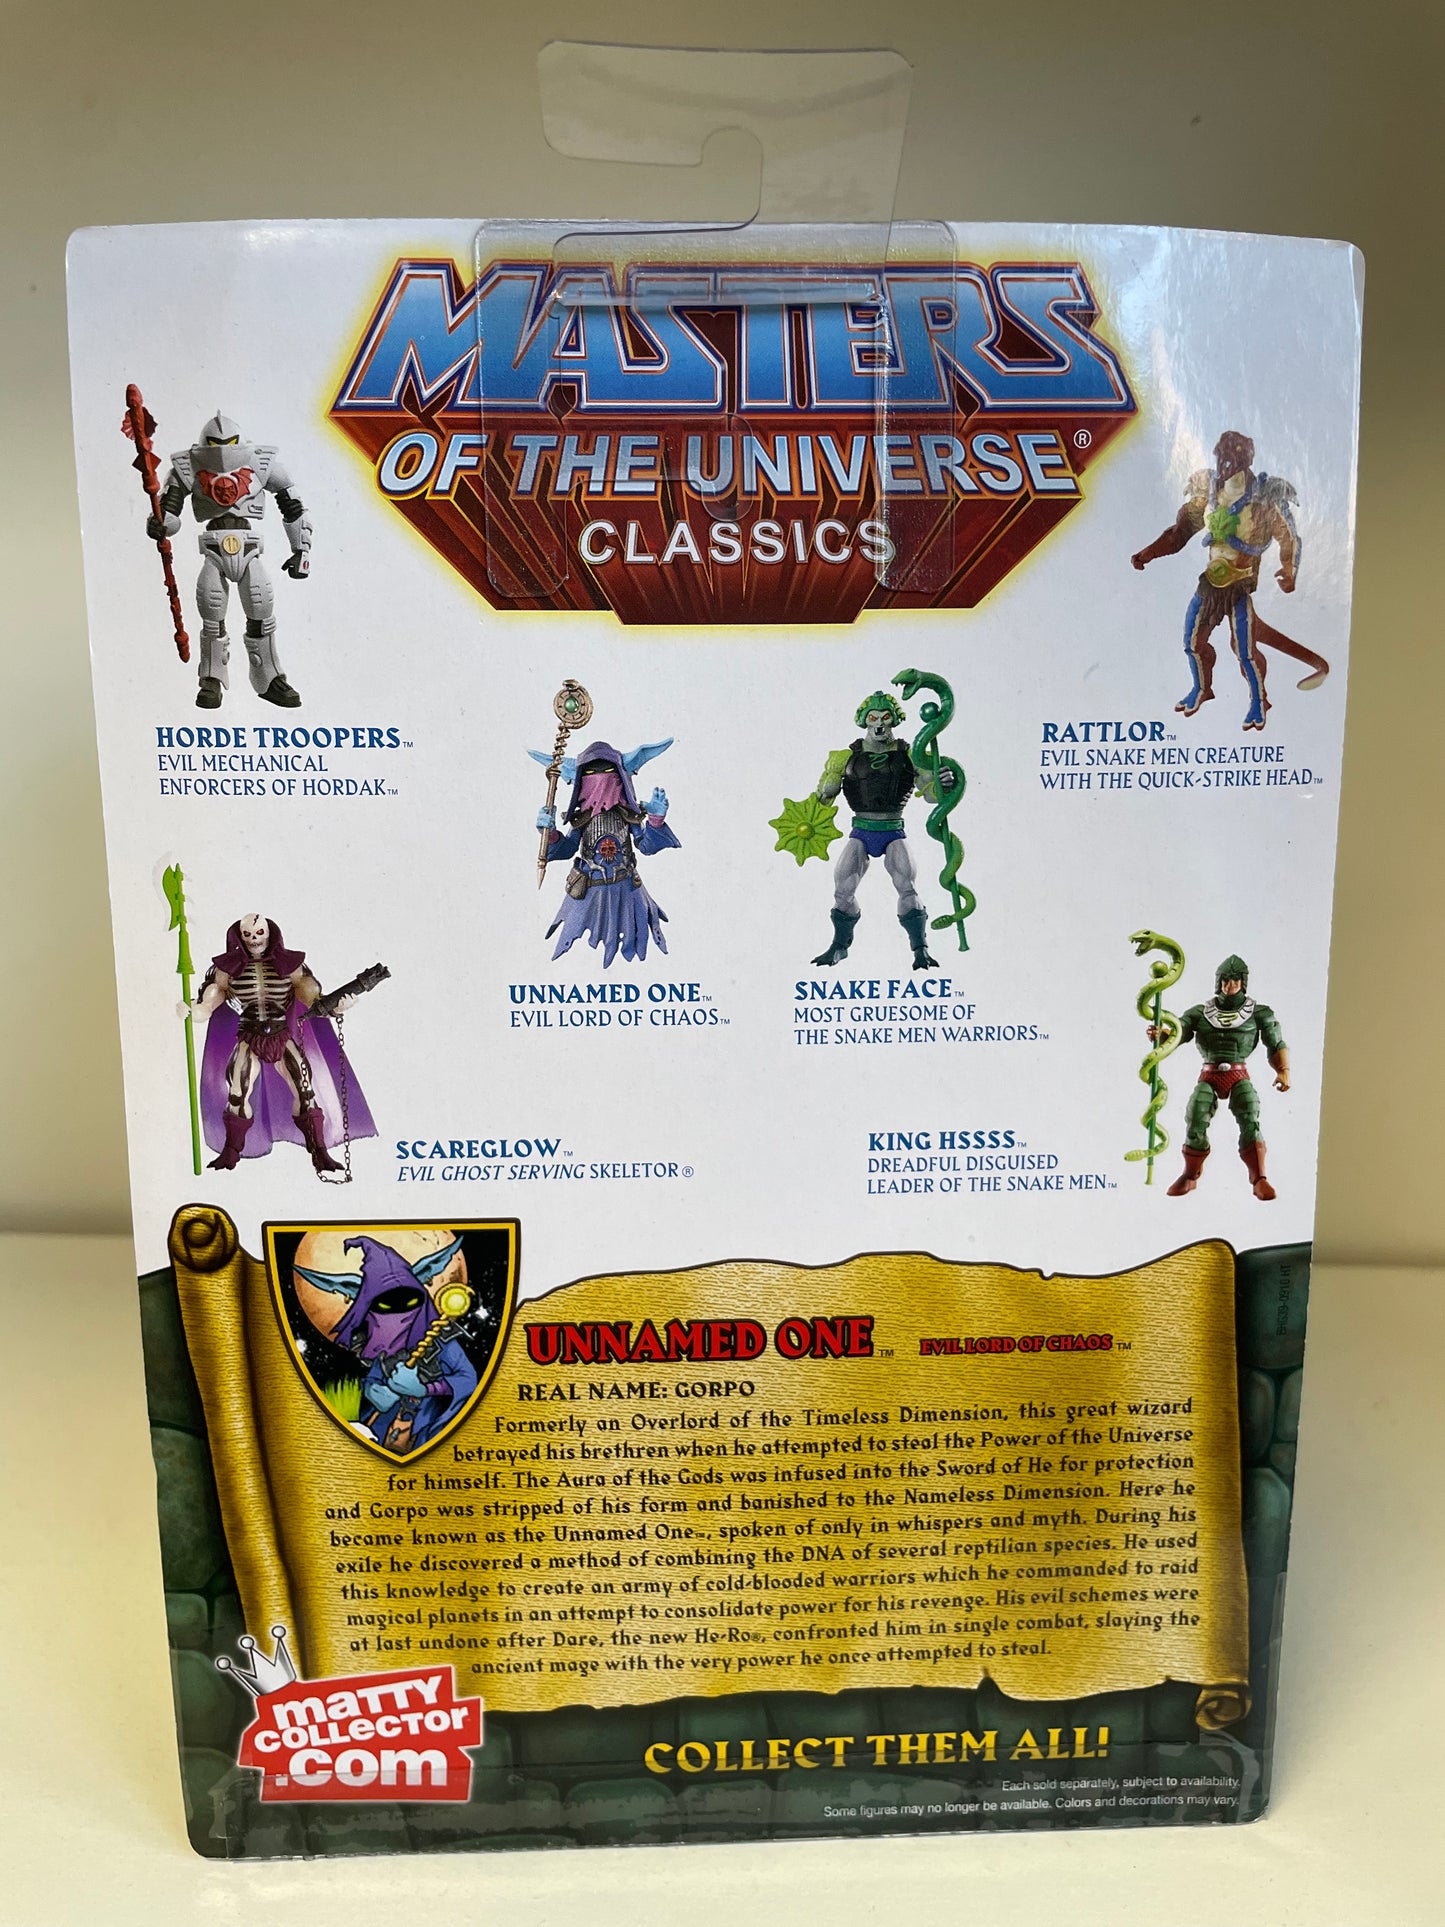 MOTUC He-Ro Son of He-Man Master’s of the Universe Classics